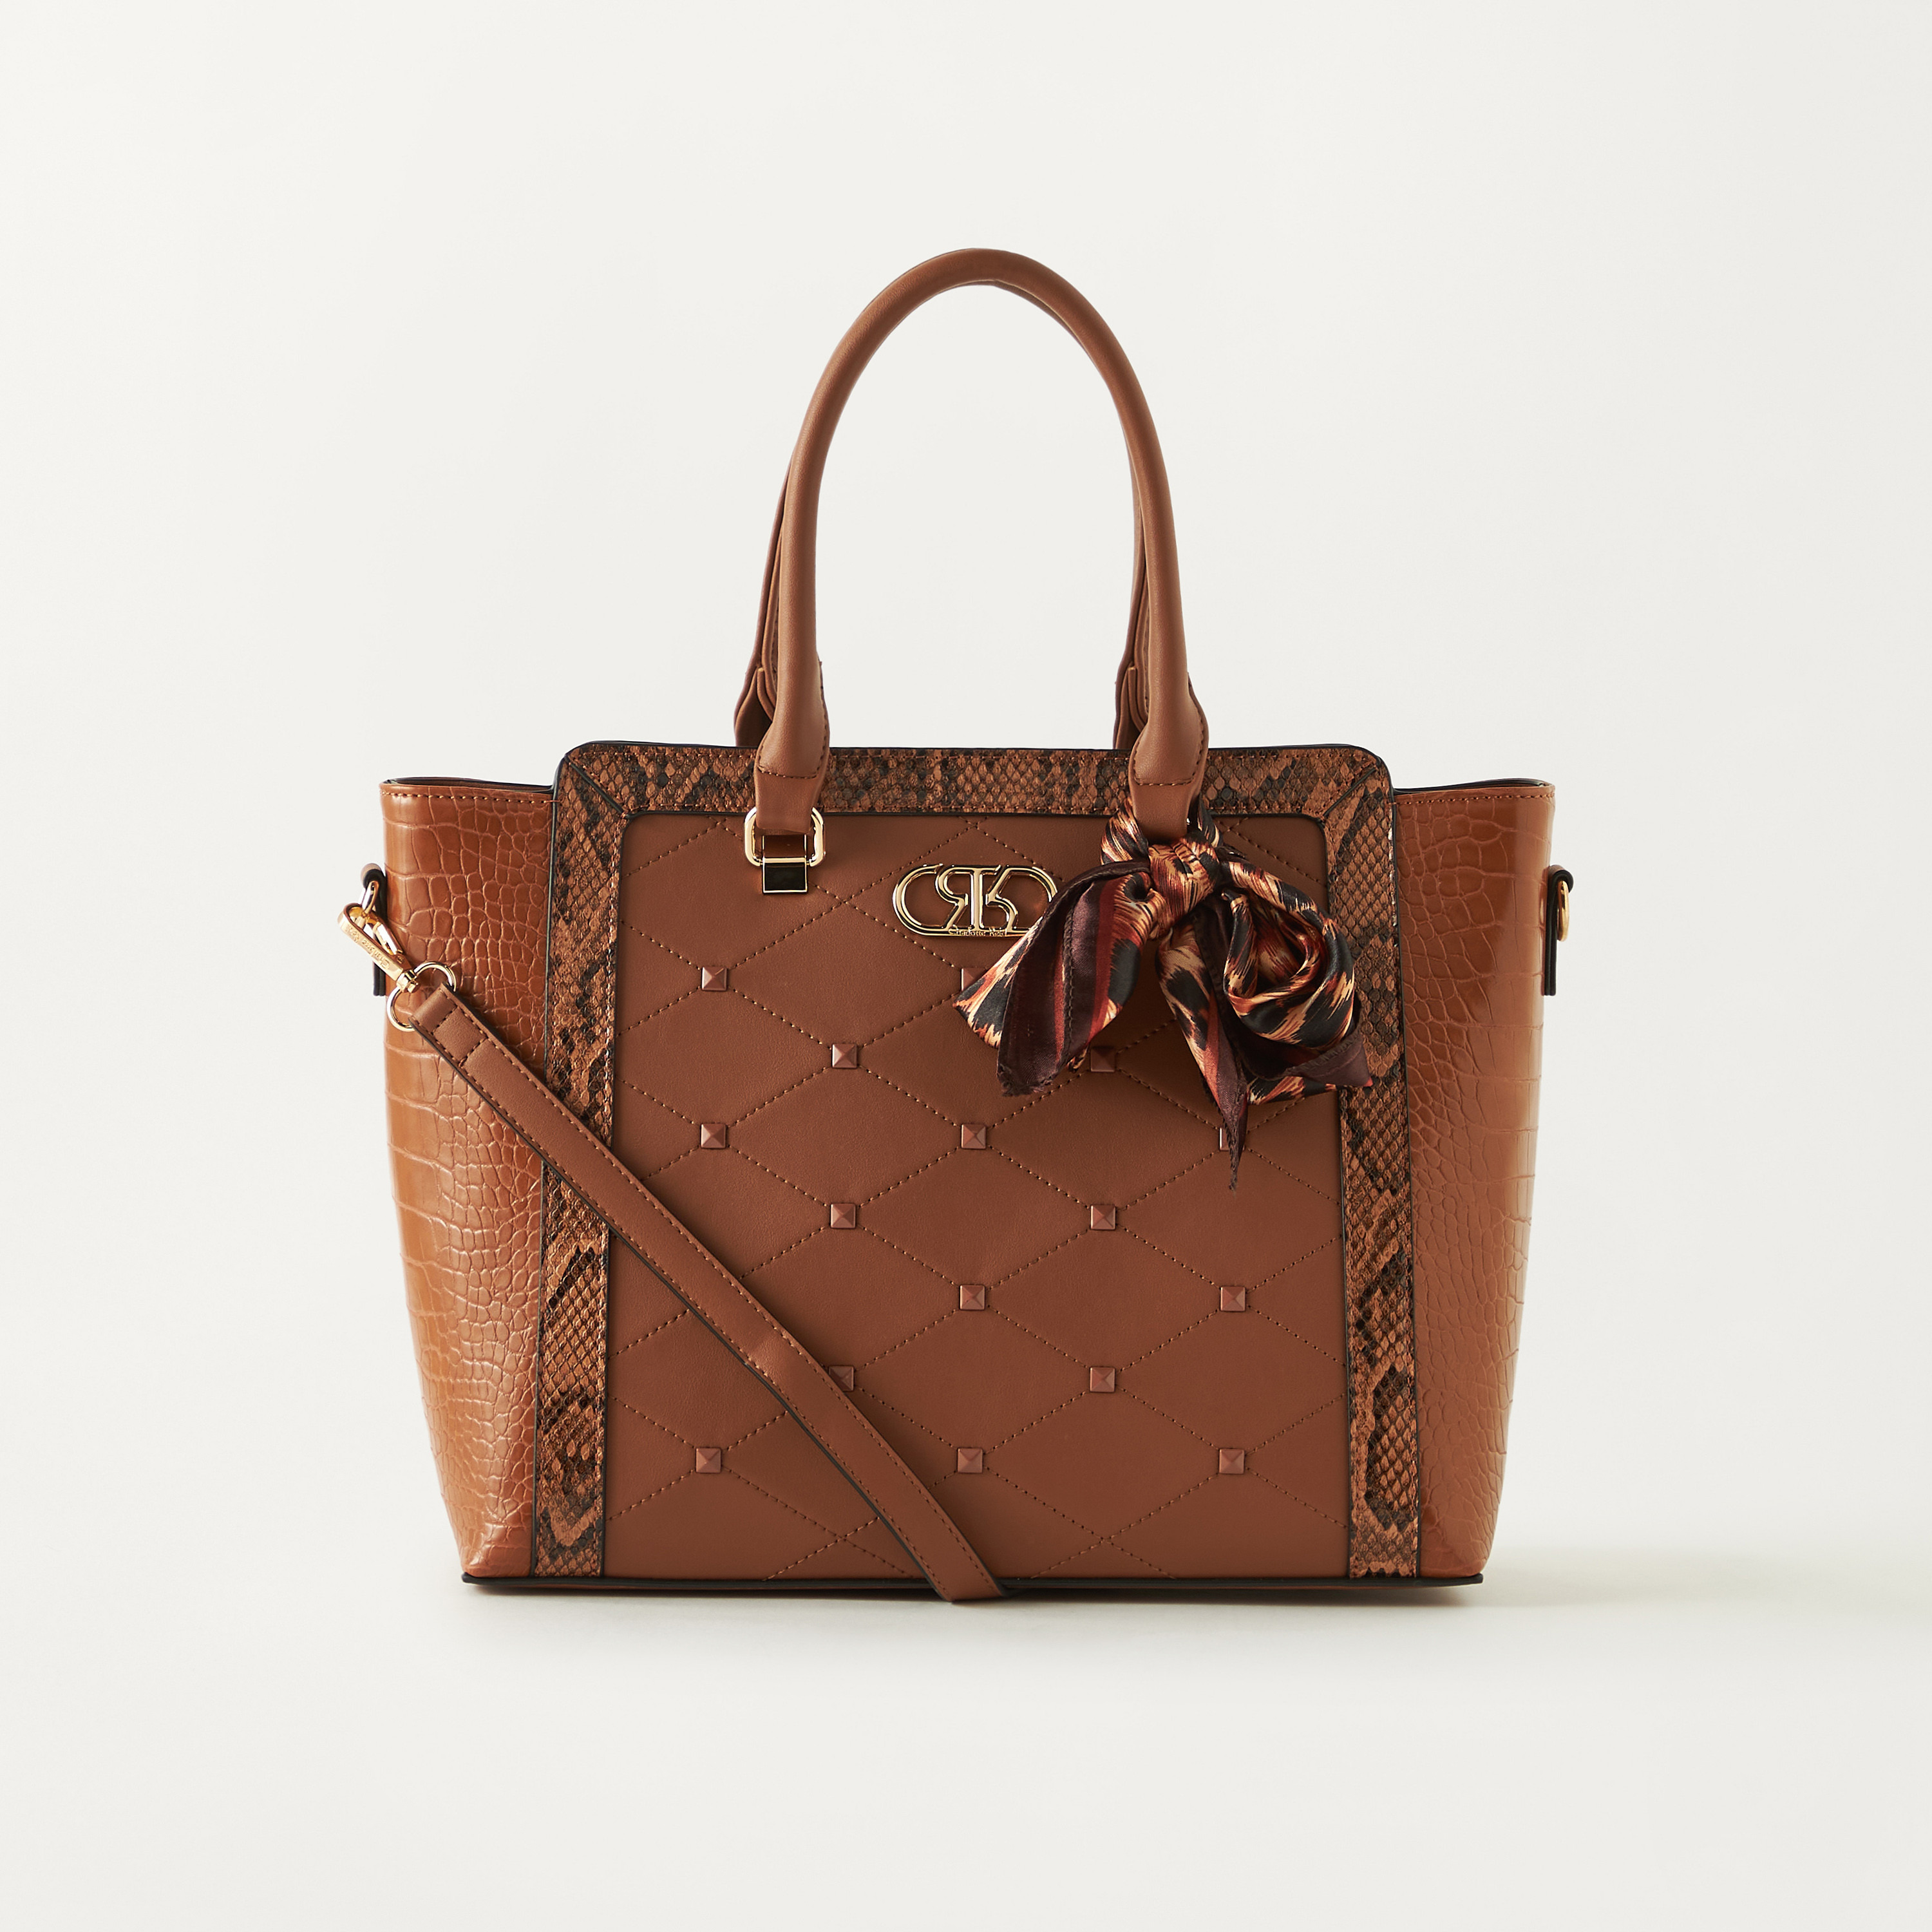 Cute Crossbody Bag for Women Charlotte Reid London Charms Motiff Rare | eBay